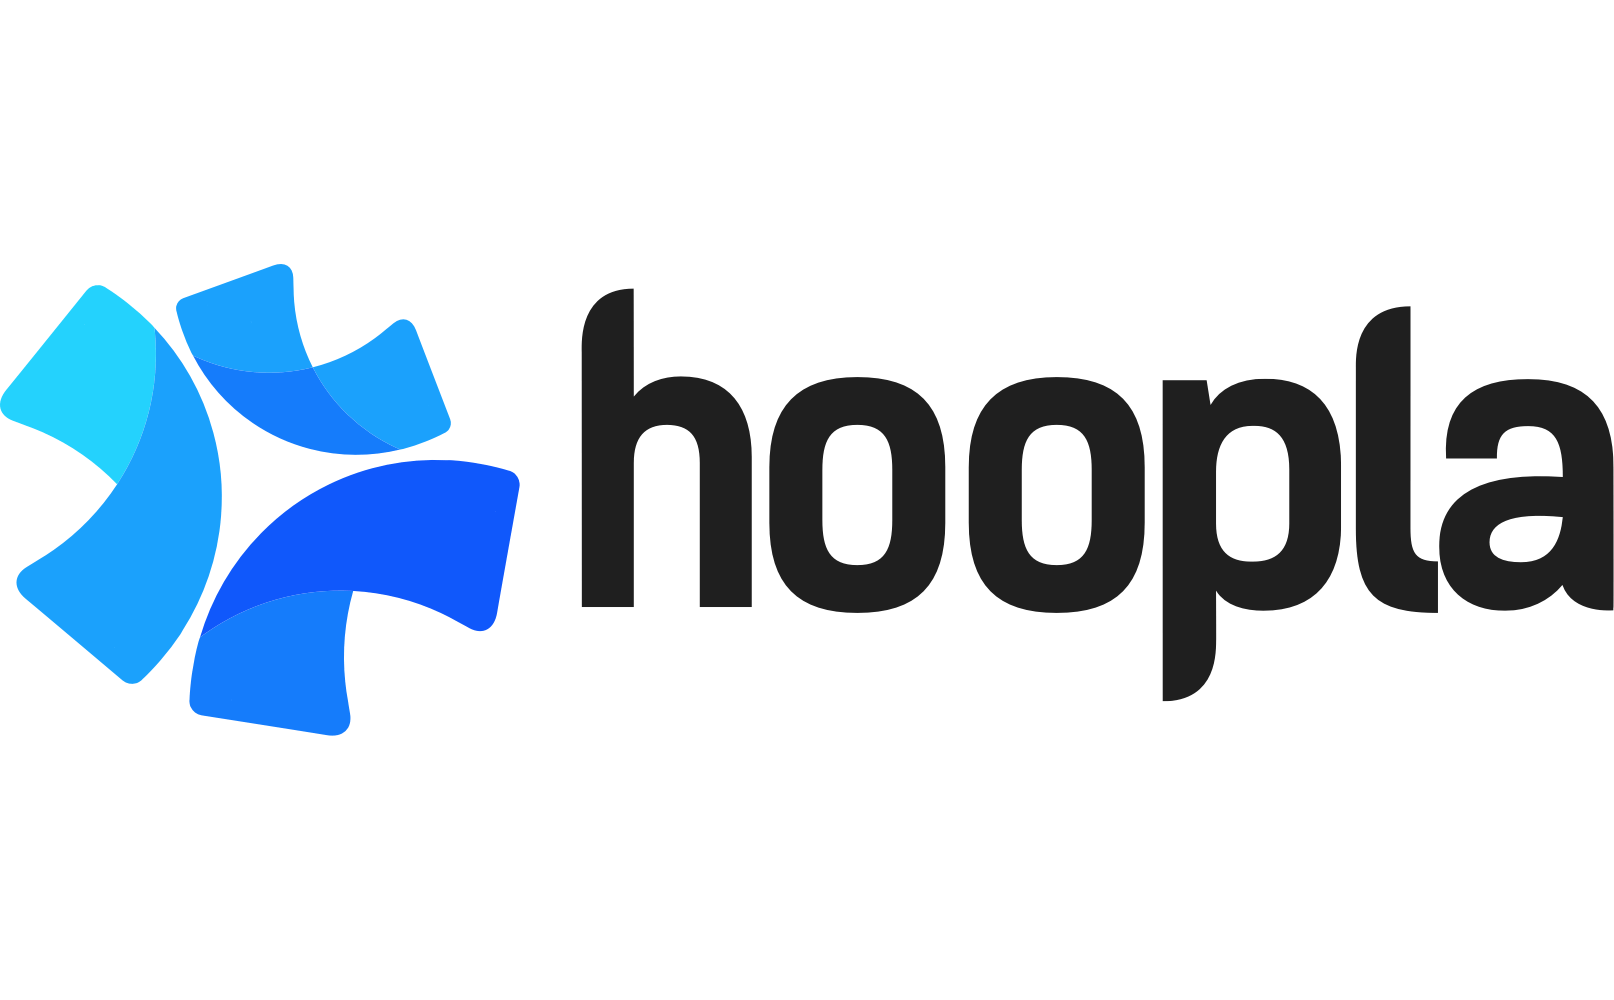 Hoopla Logo - Employee Motivation and Engagement Platform - Hoopla